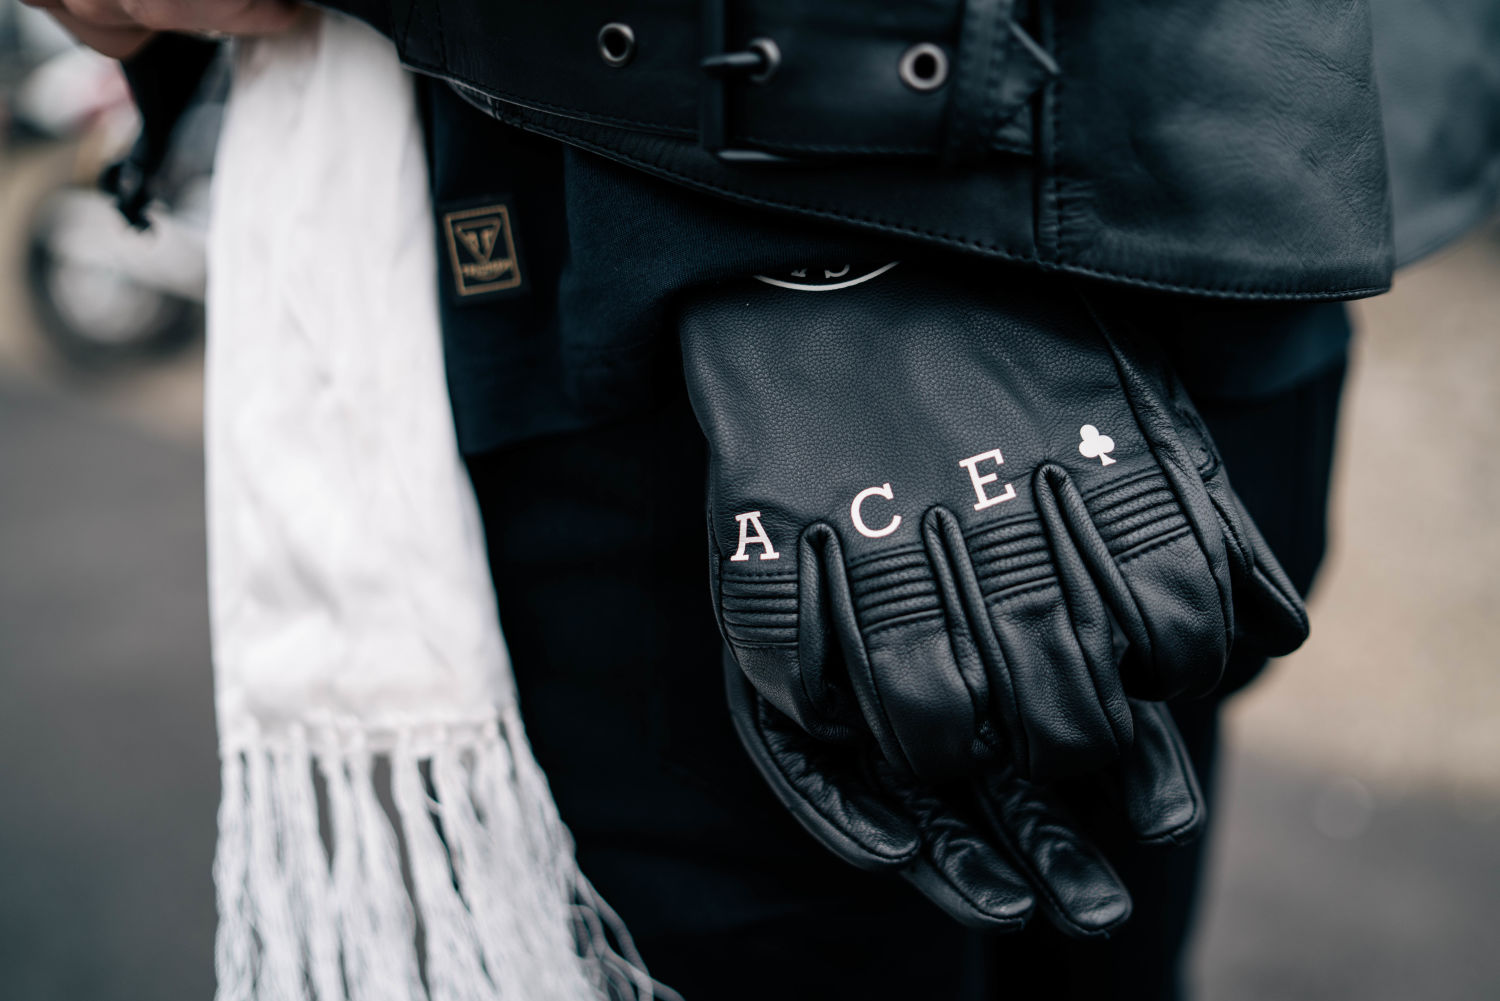 Ace Cafe Handschuhe